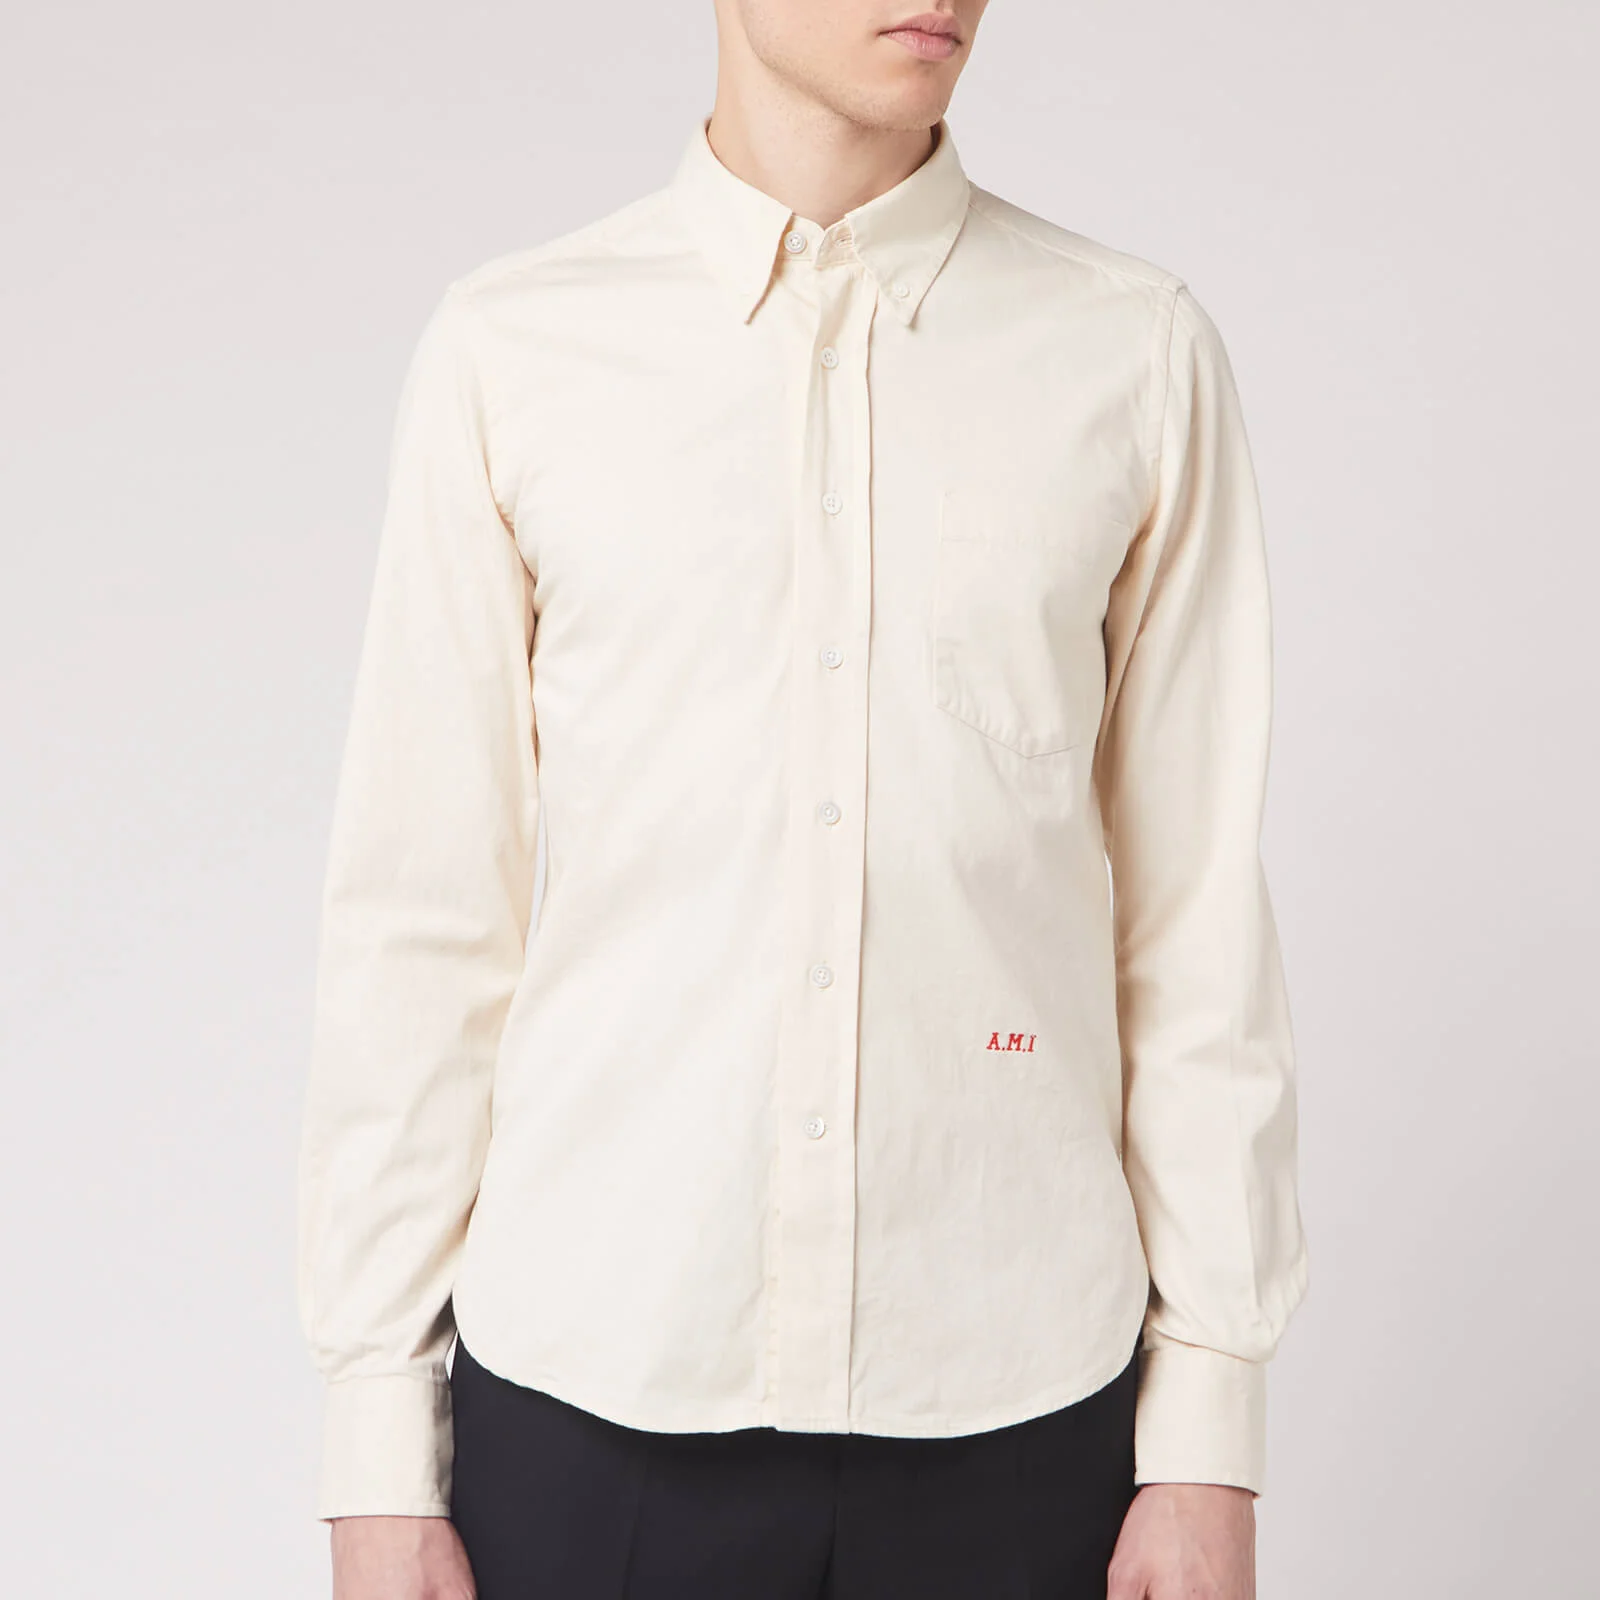 AMI Men's Button Down "Boy" Fit Shirt - Off White Image 1